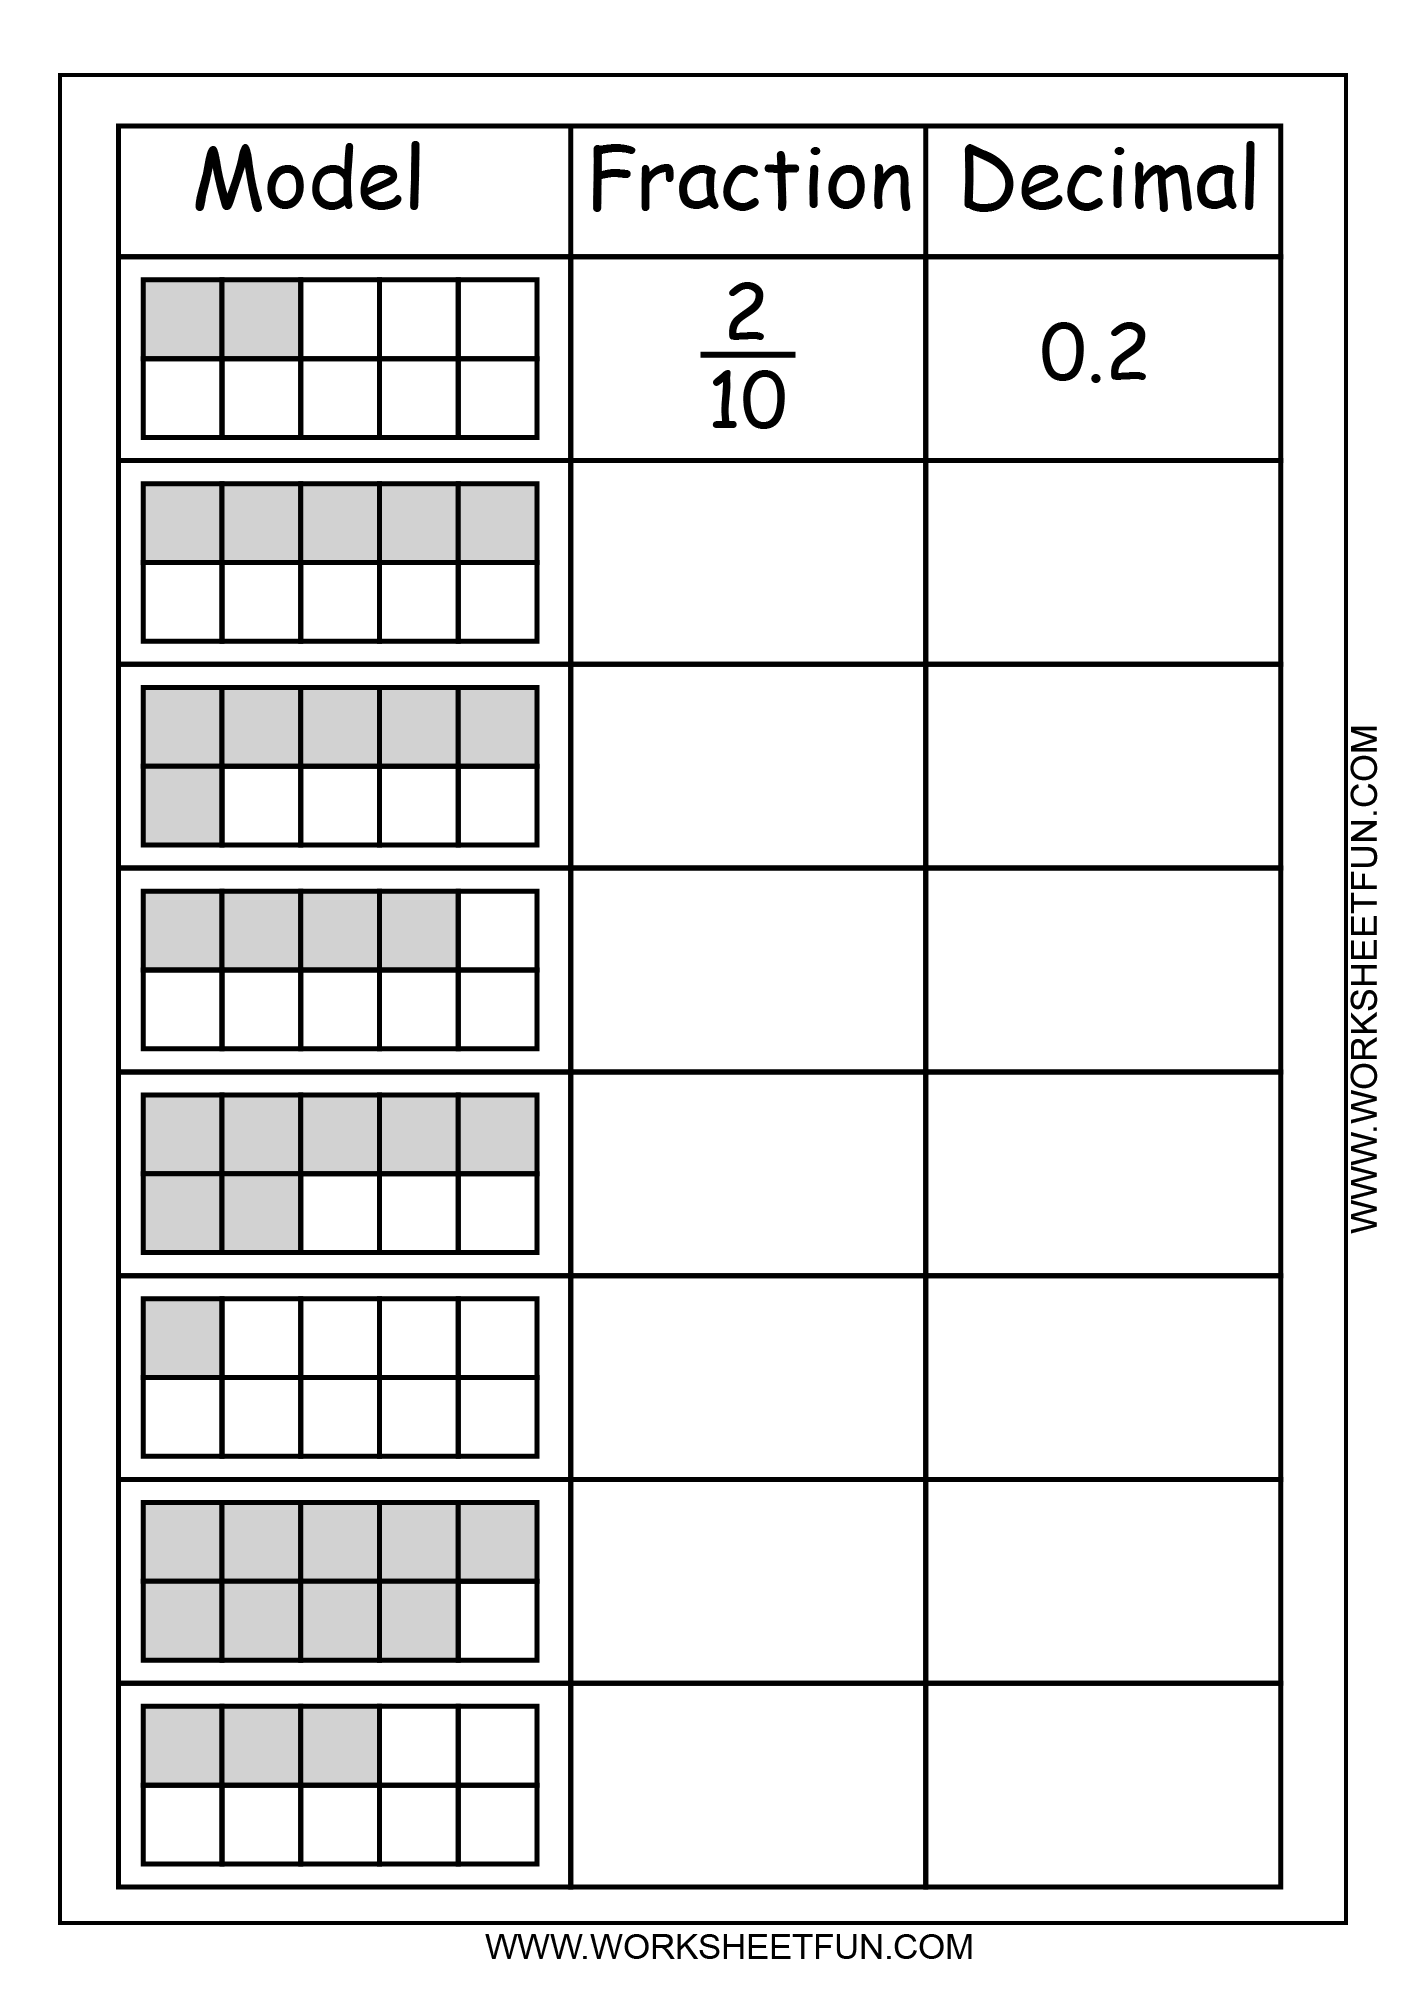 fractions-and-decimals-worksheet